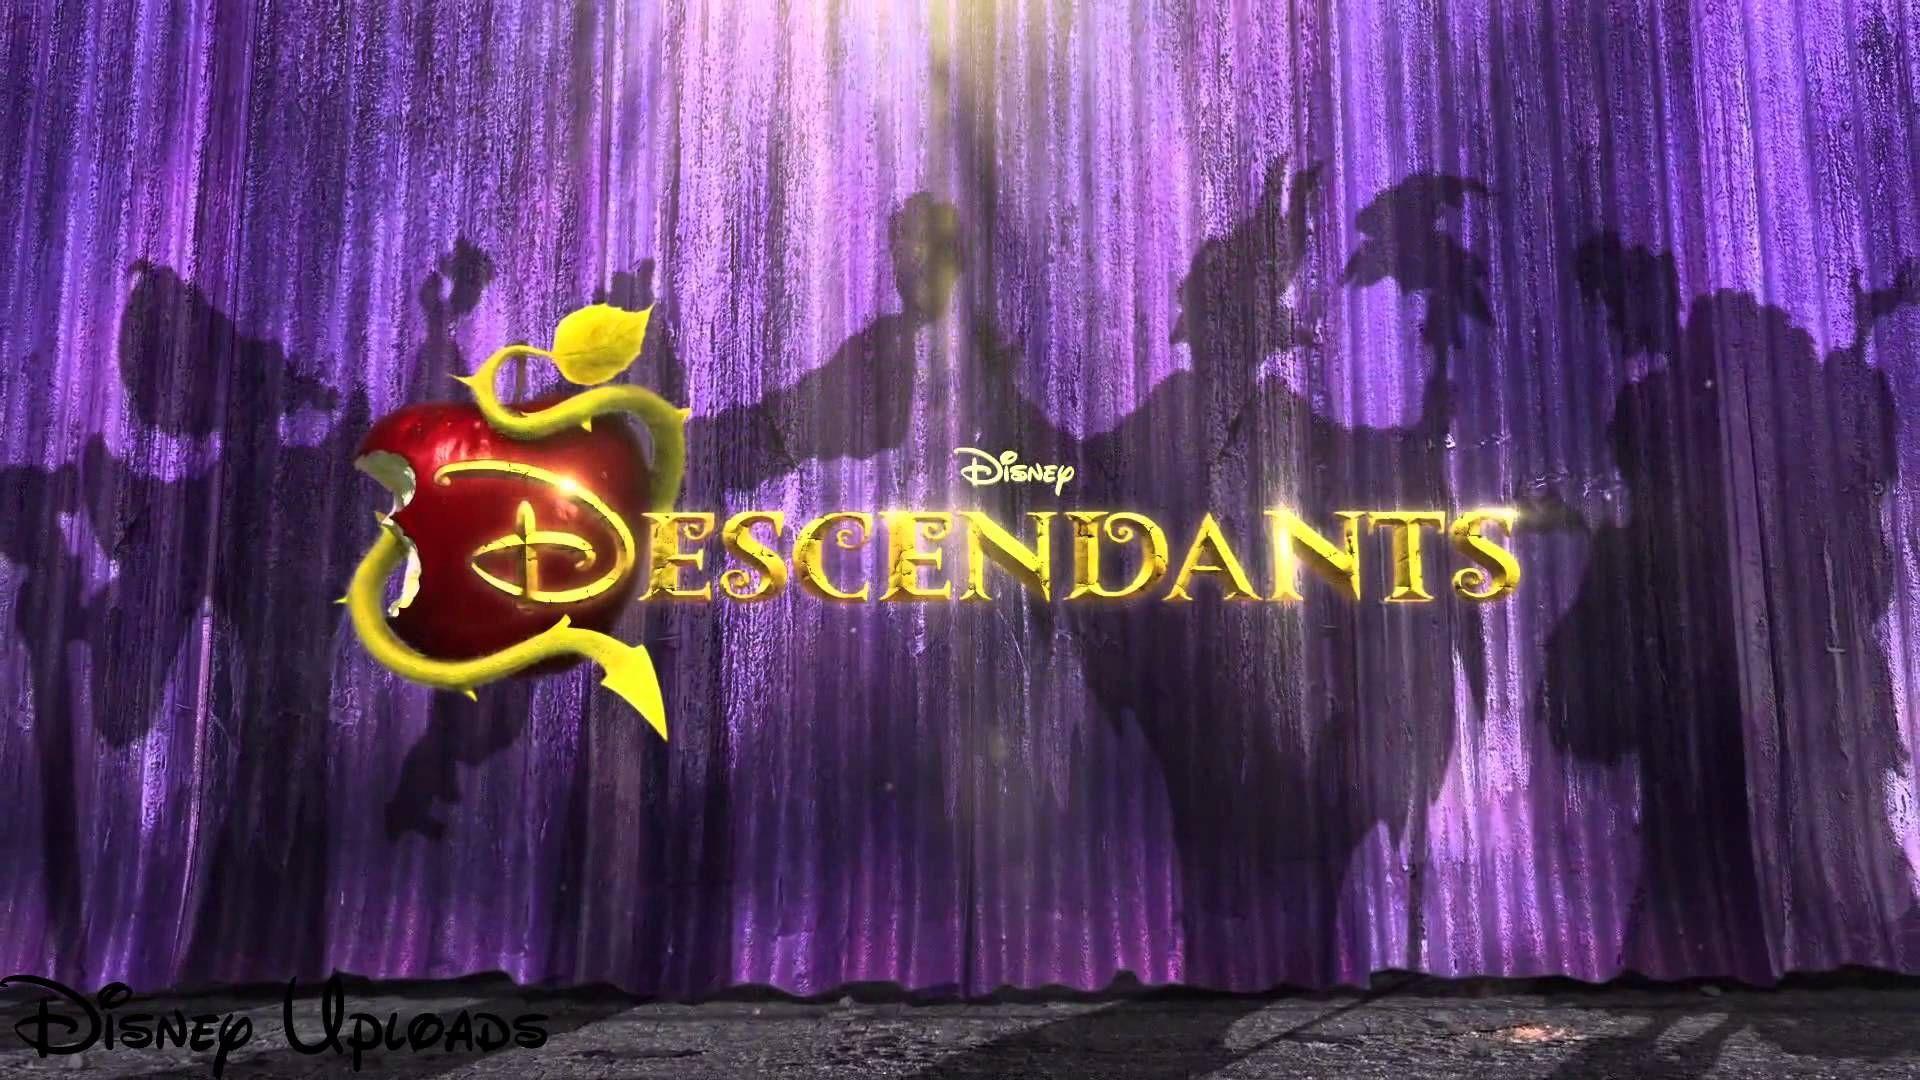 Descendants. Teaser. ✶ iLღve Disney ✶. Descendants